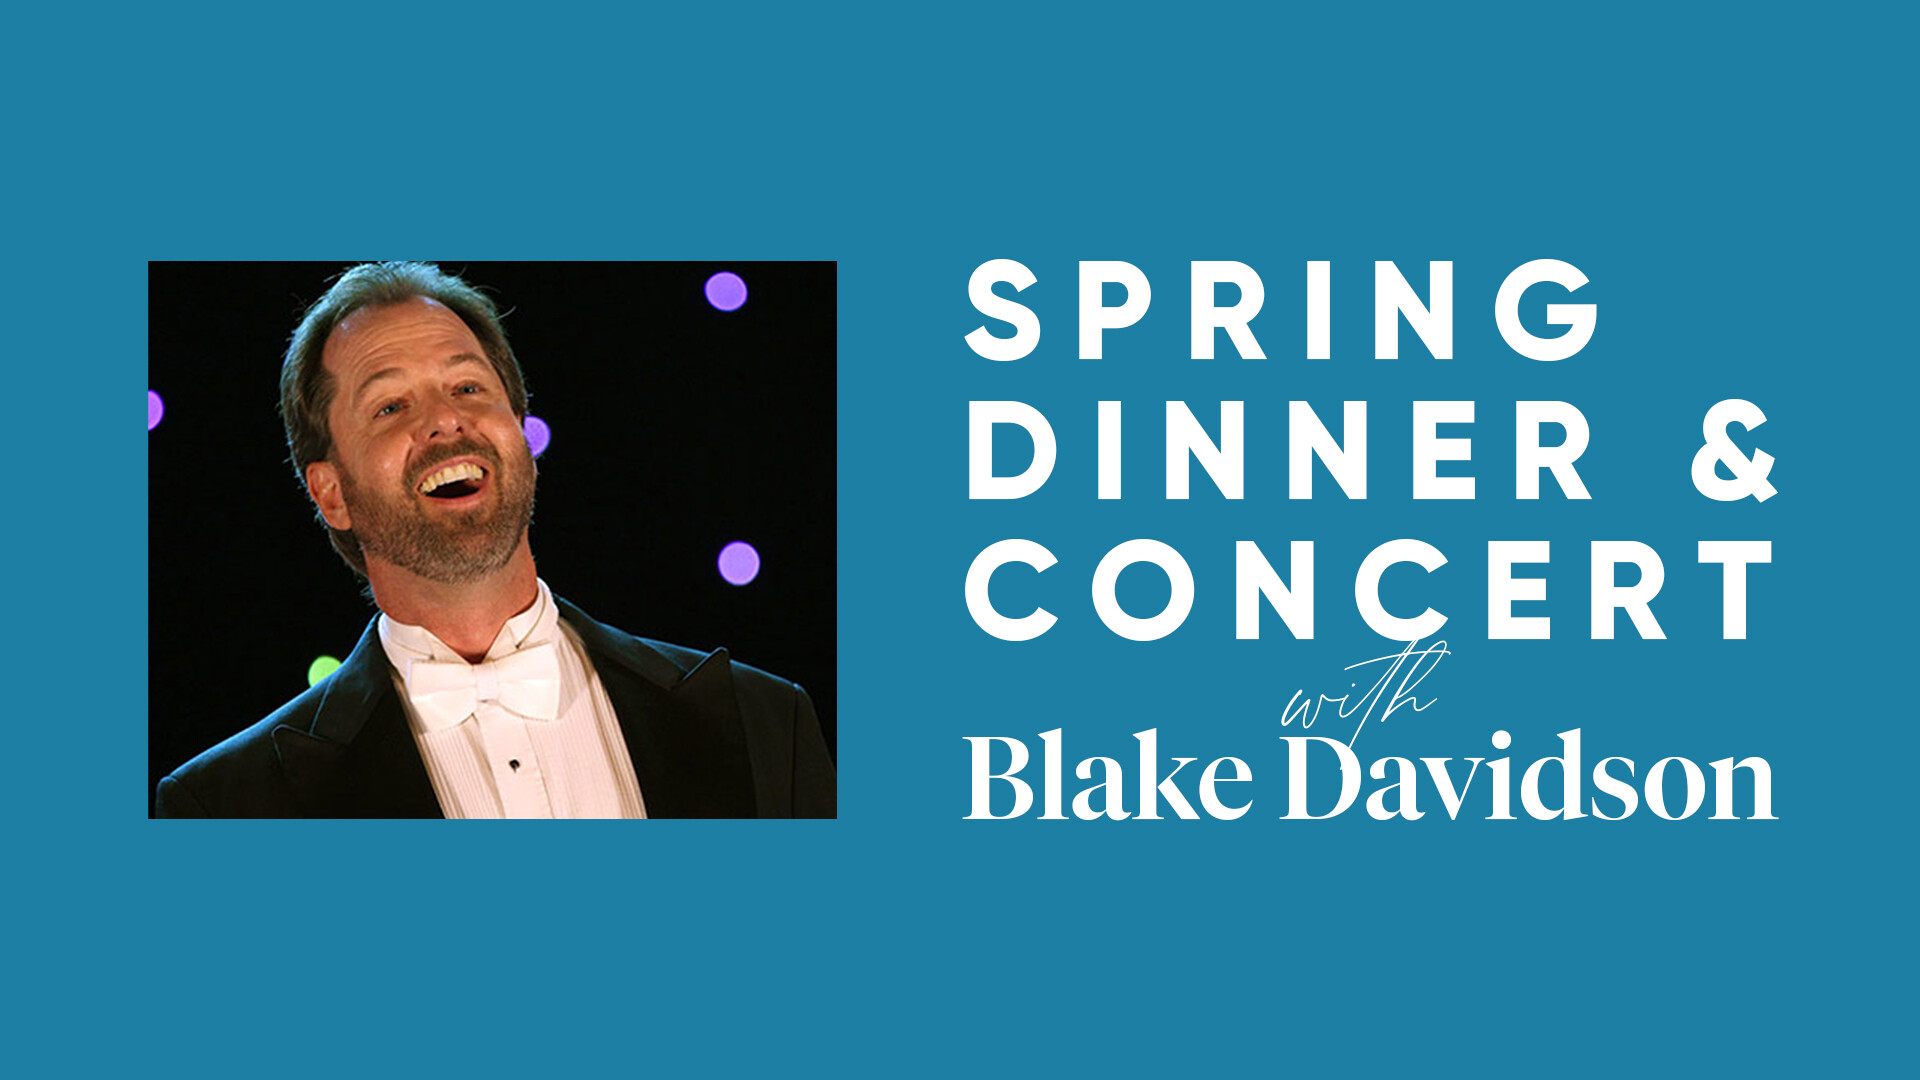 Spring Dinner & Concert with Blake Davidson